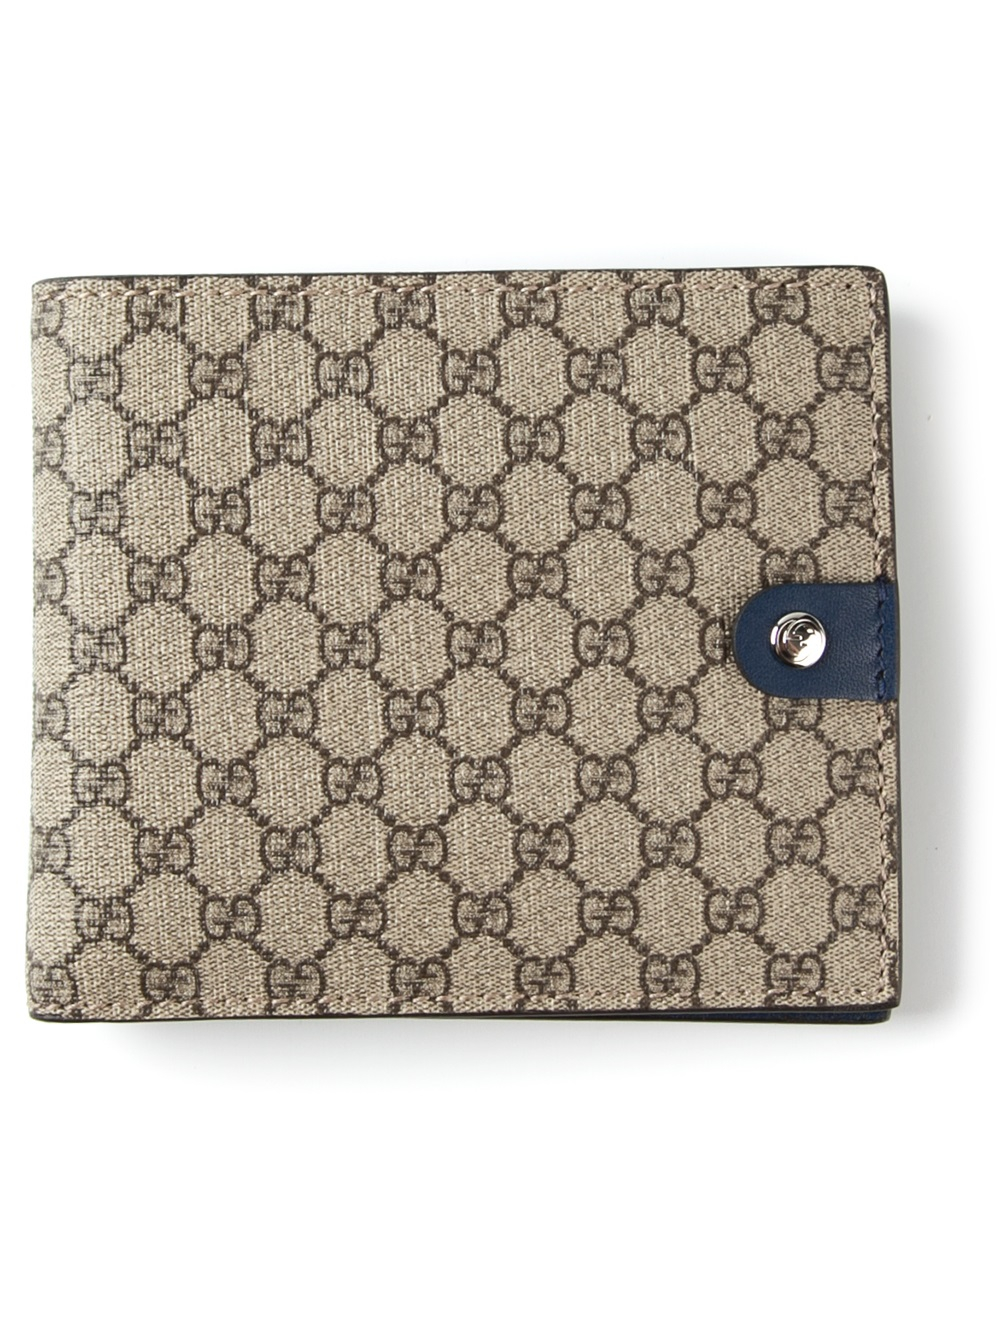 Gucci Monogram Wallet in Brown for Men | Lyst